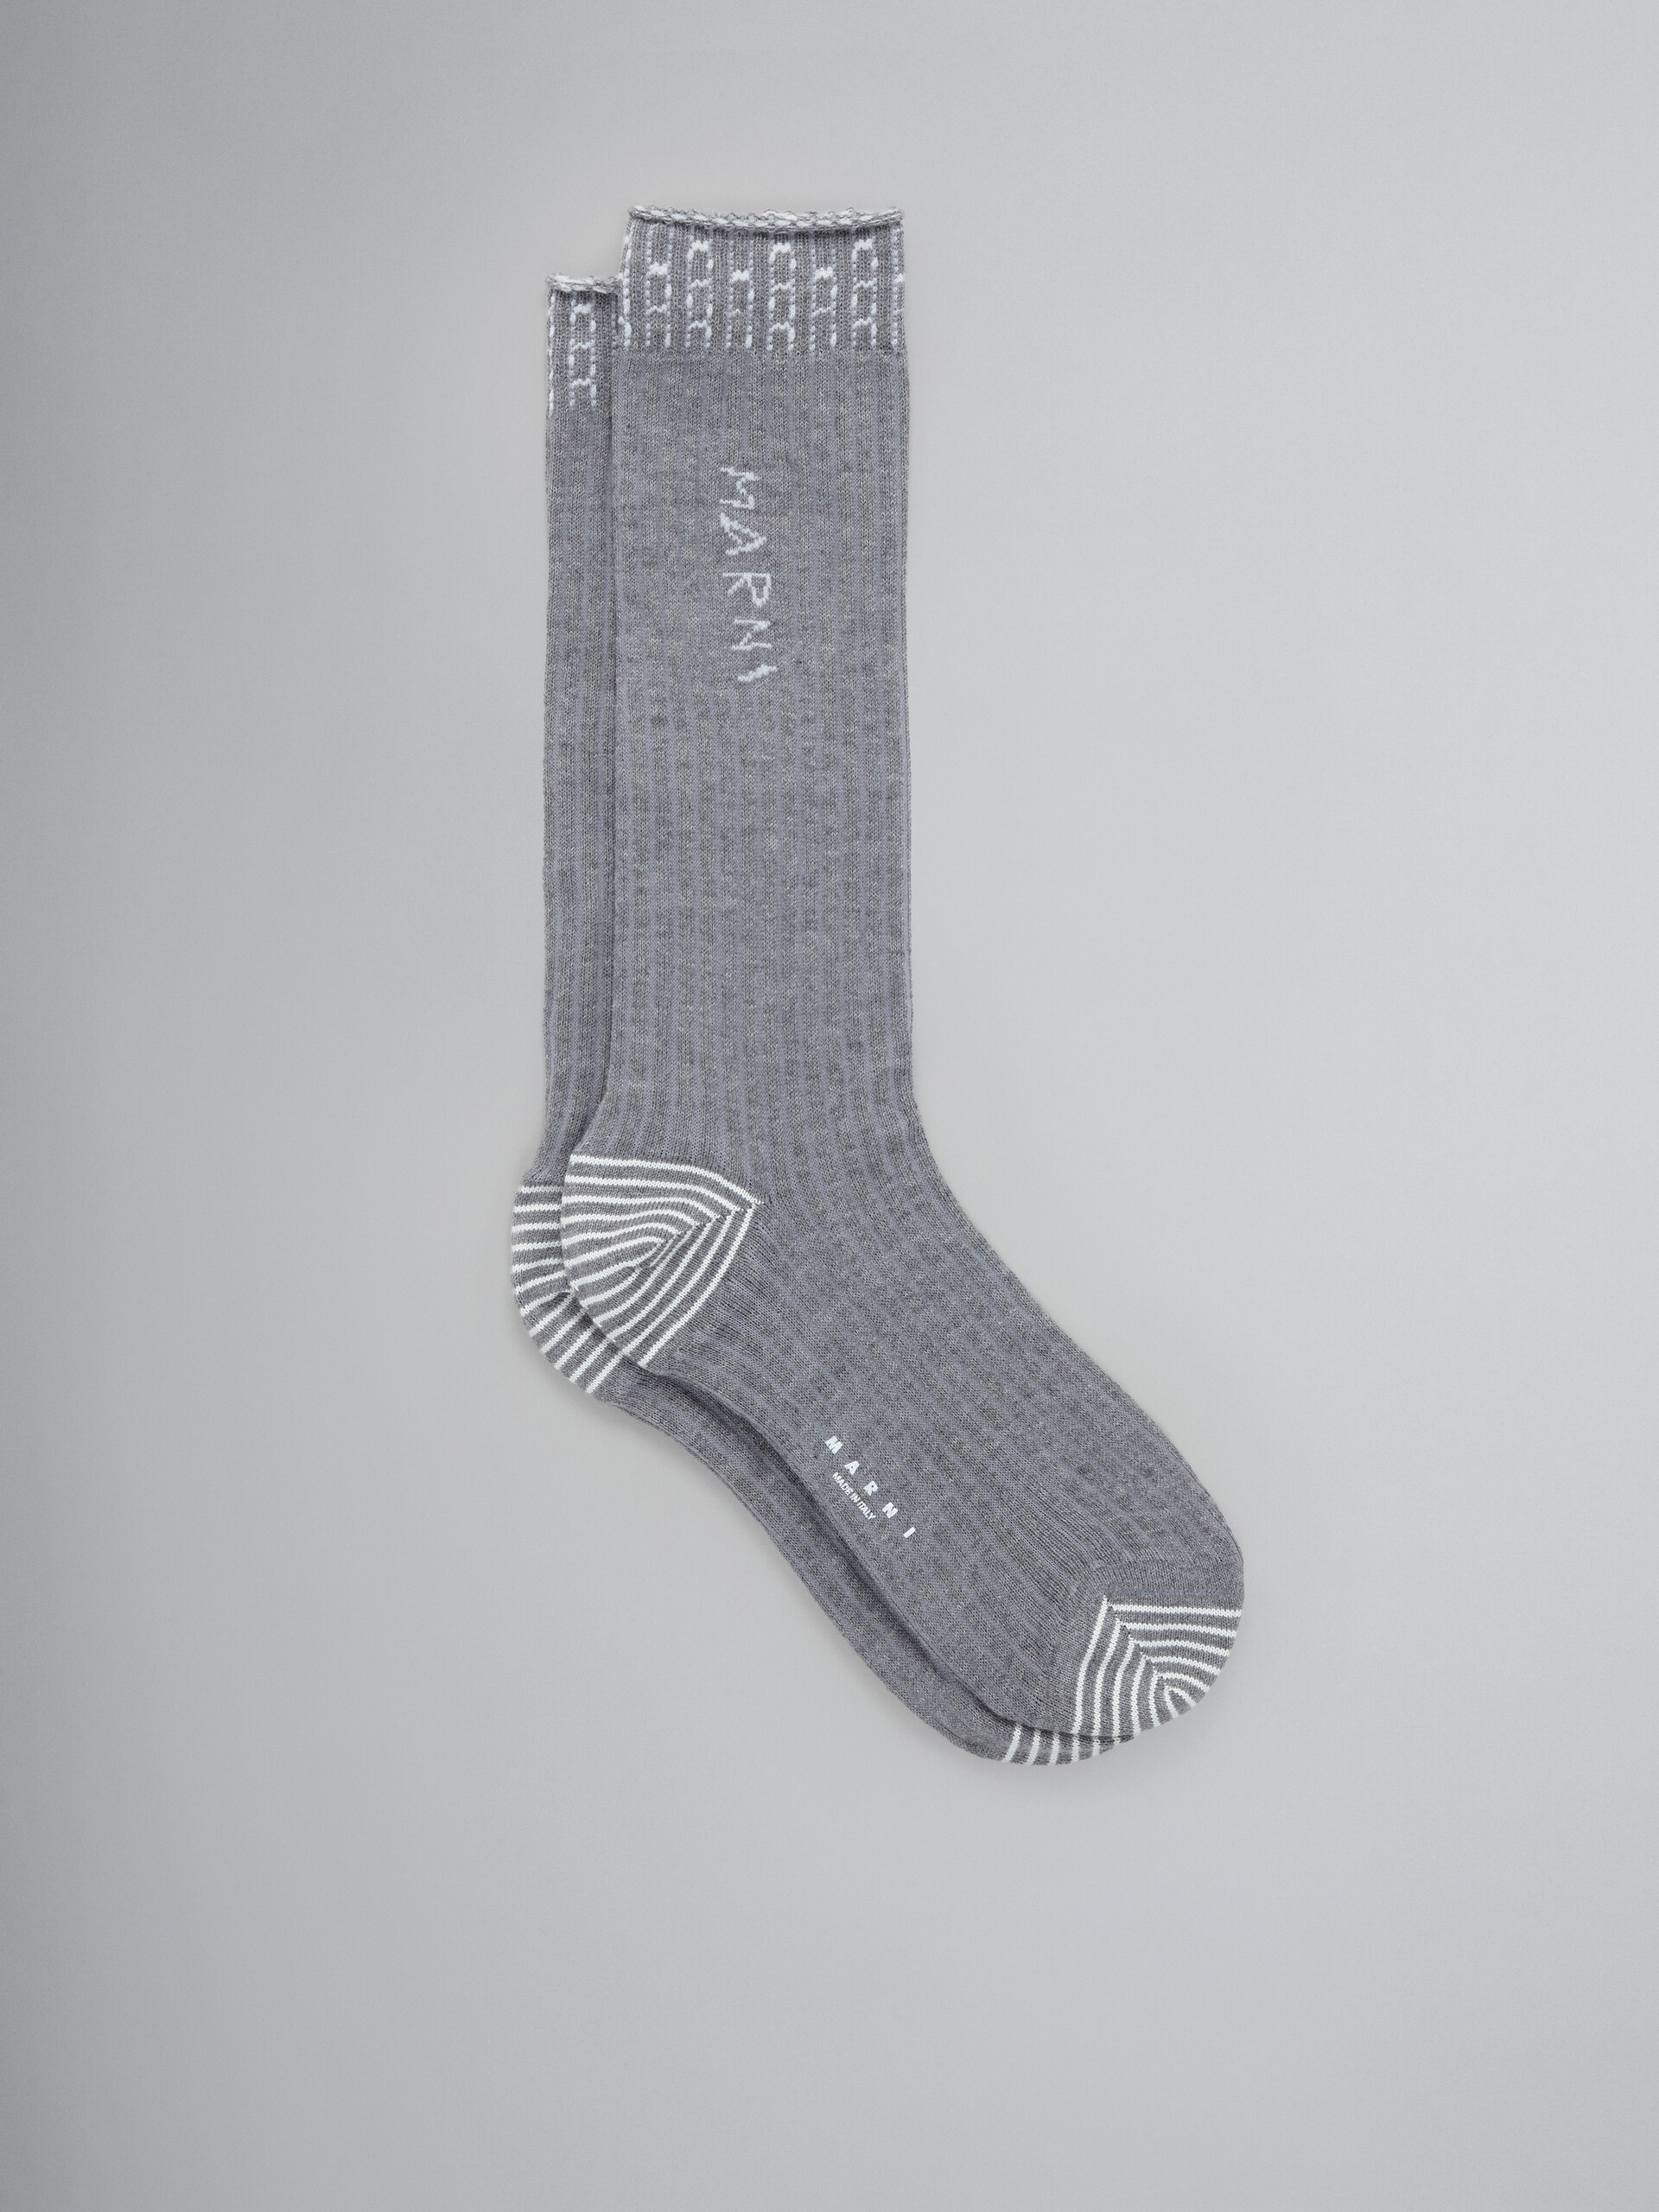 Grey cotton and nylon socks with mending - Socks - Image 1